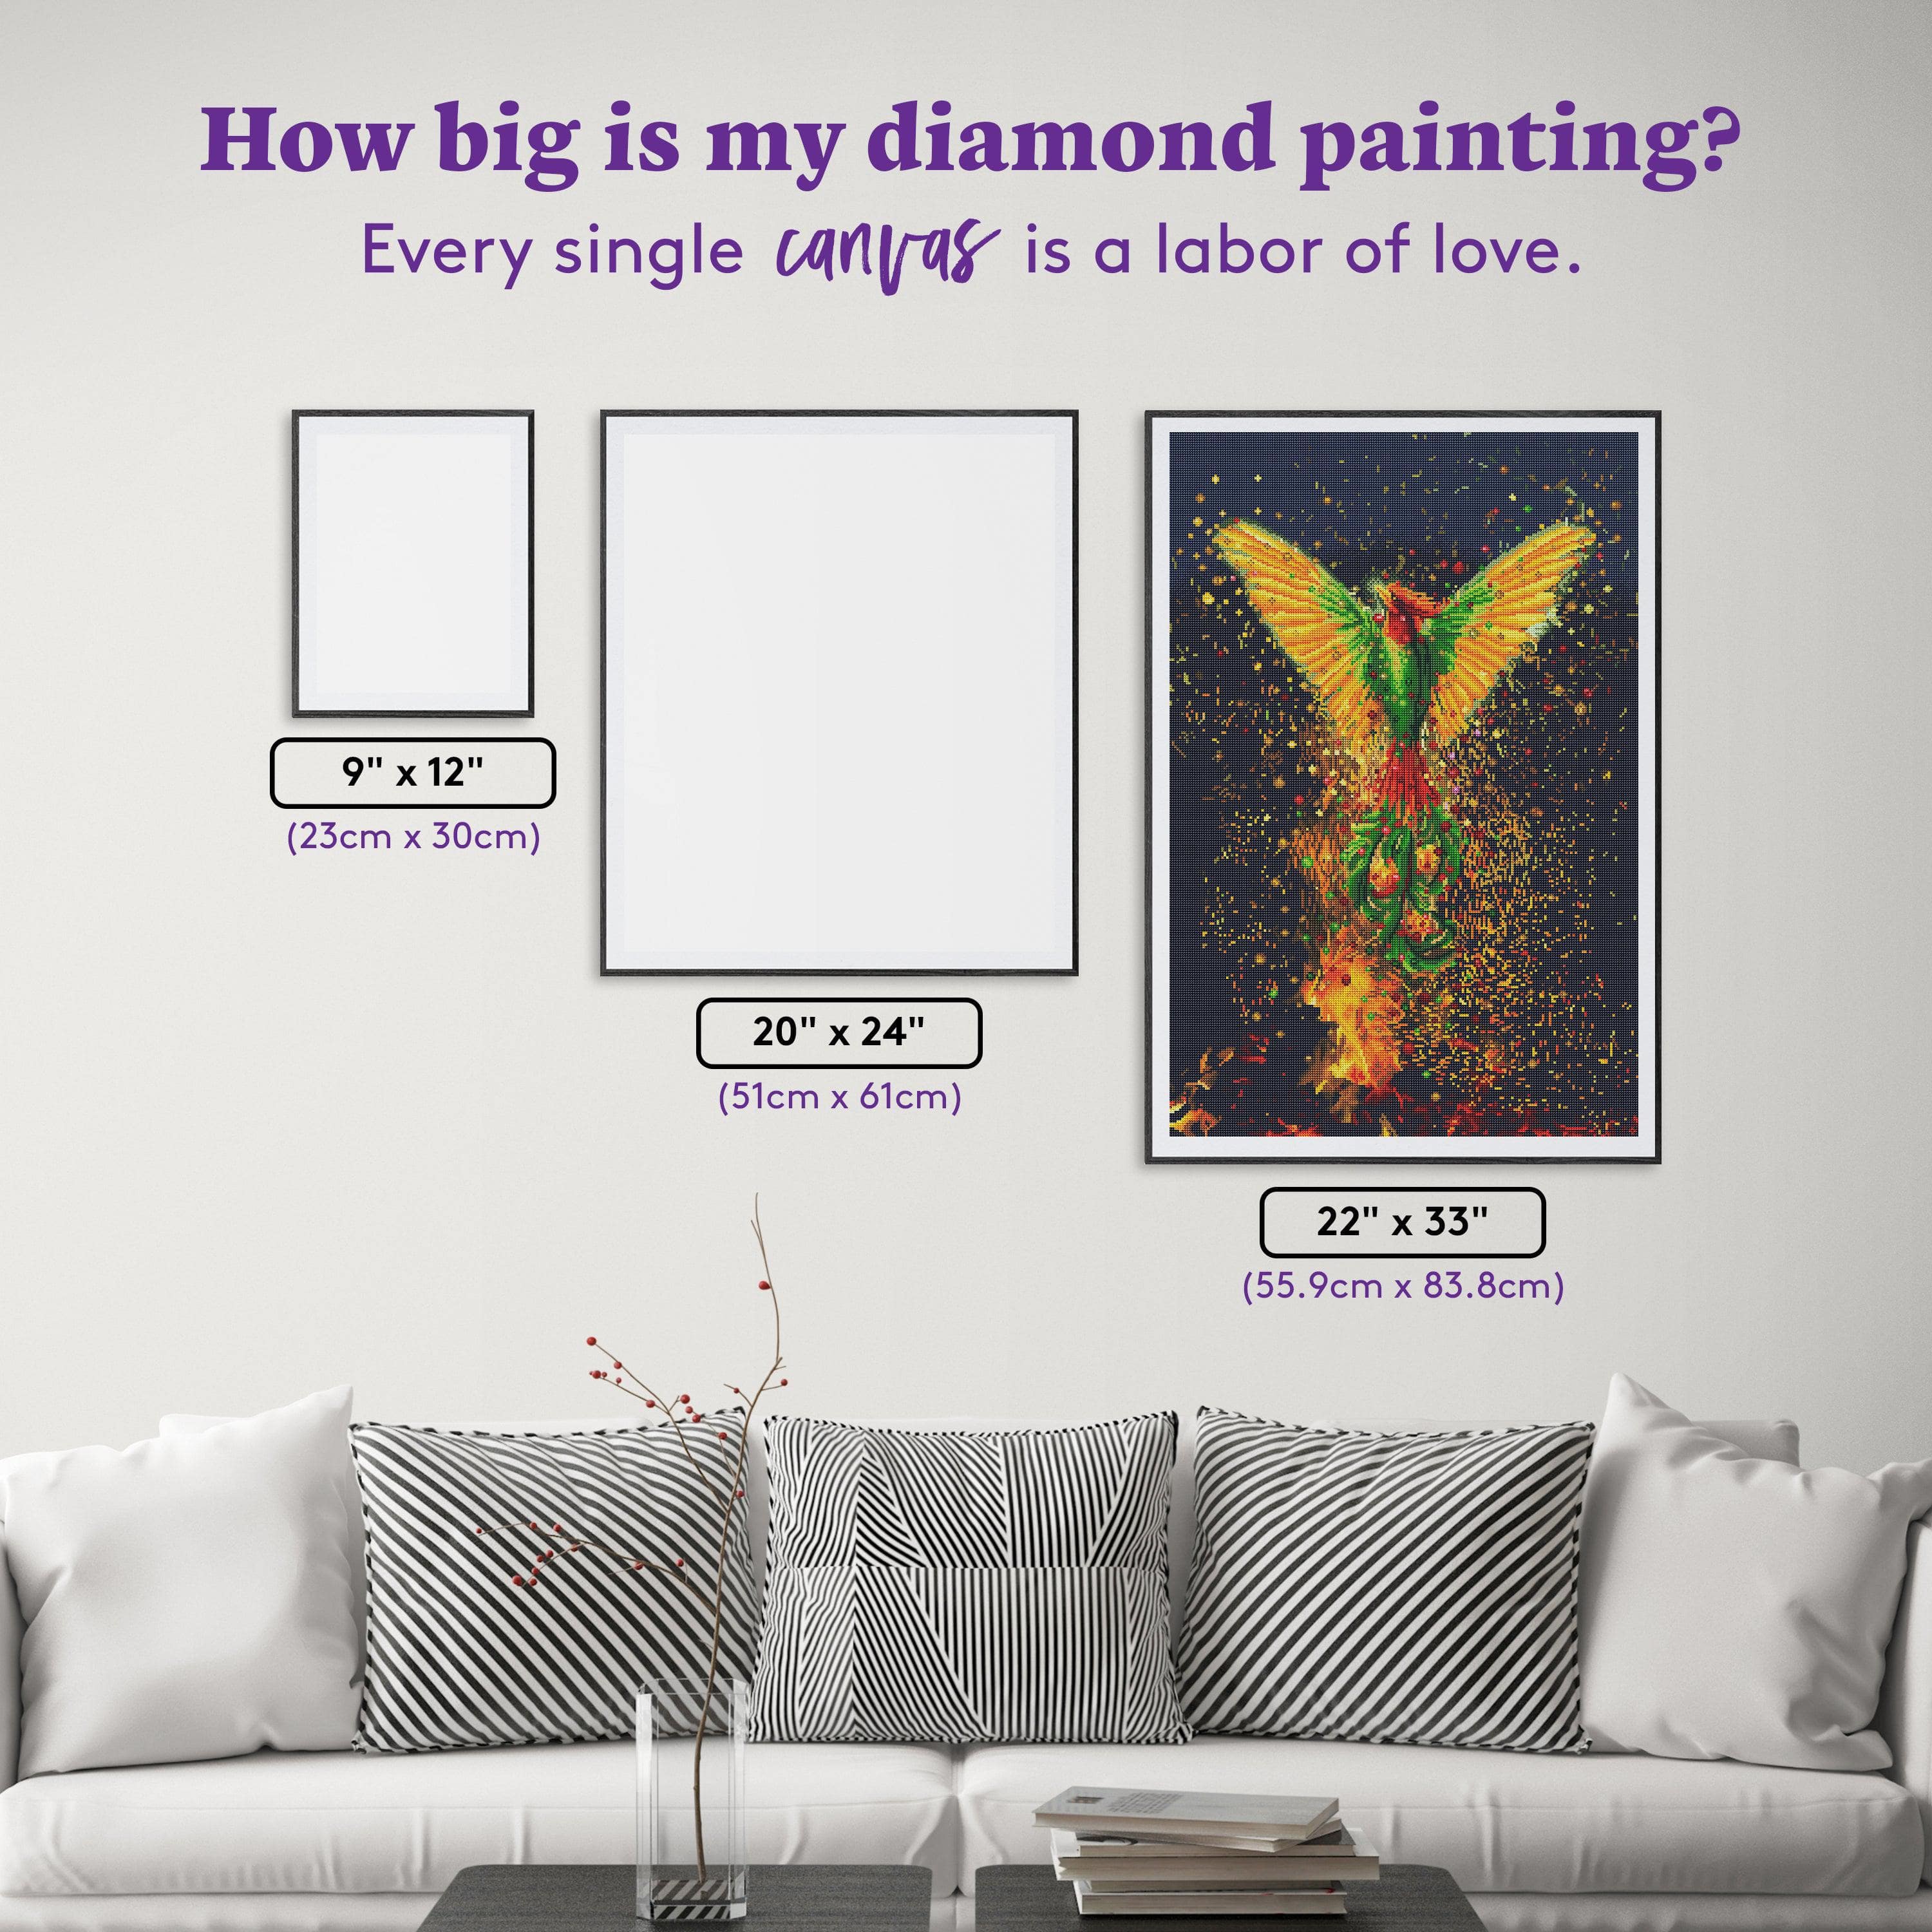 Rising Phoenix Diamond Painting Kit with Free Shipping – 5D